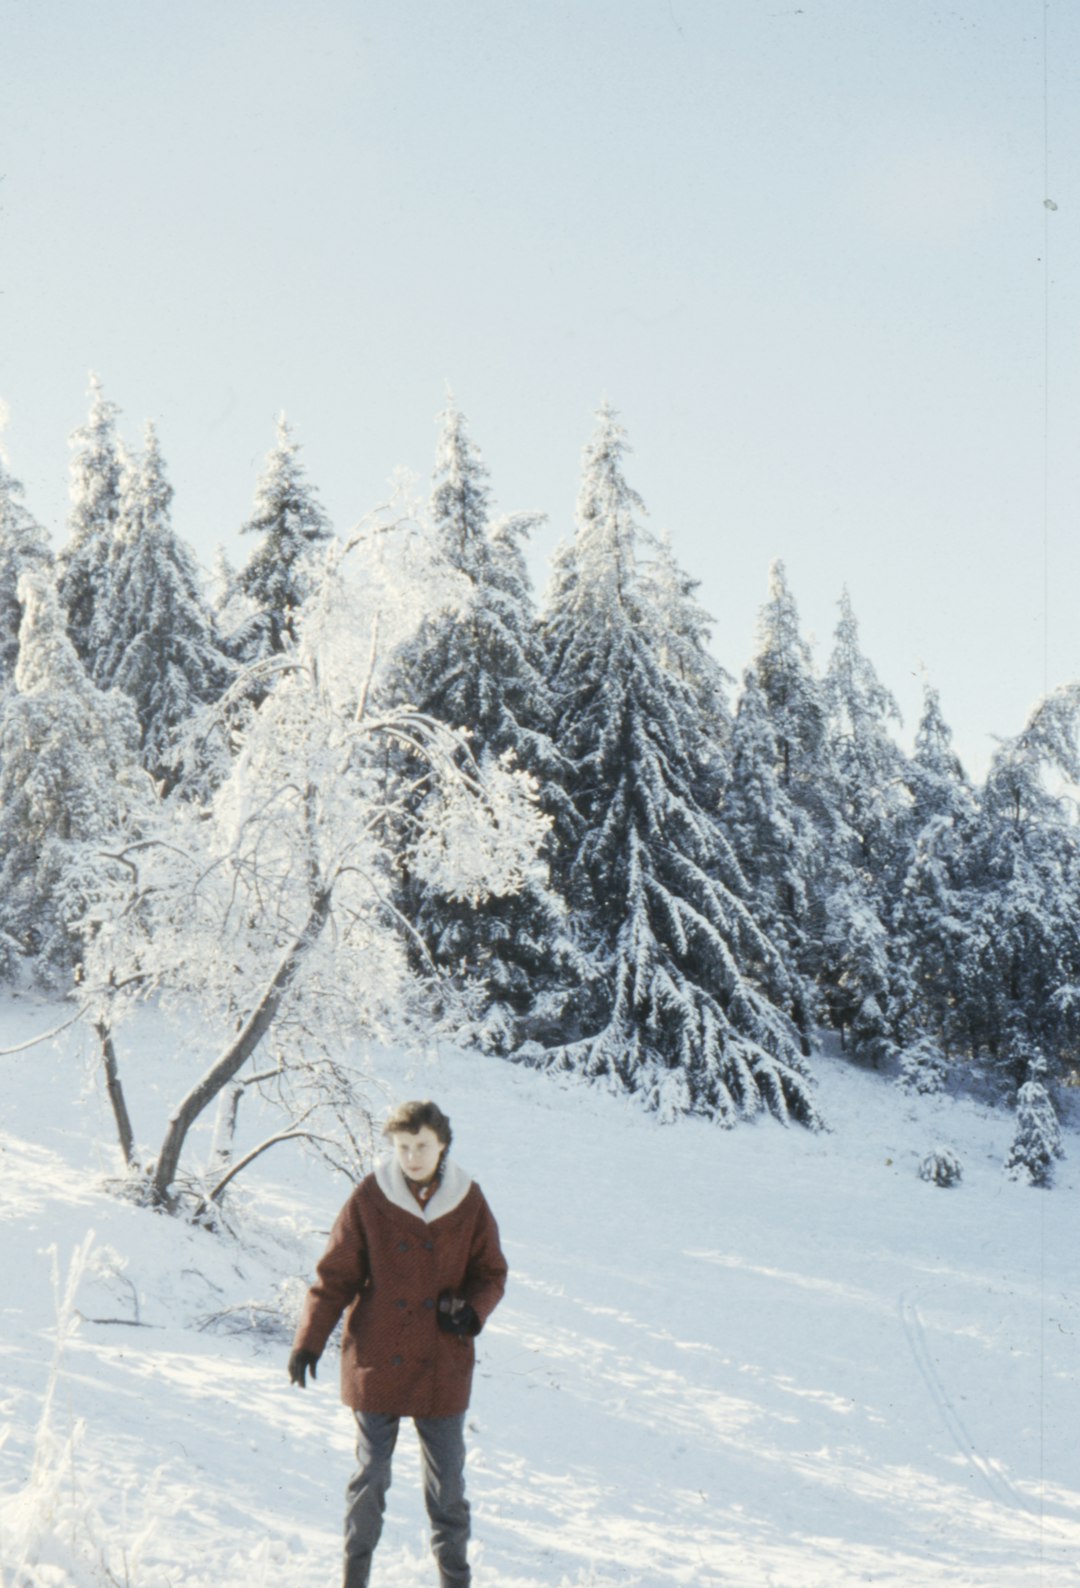 man standing on snowy ground